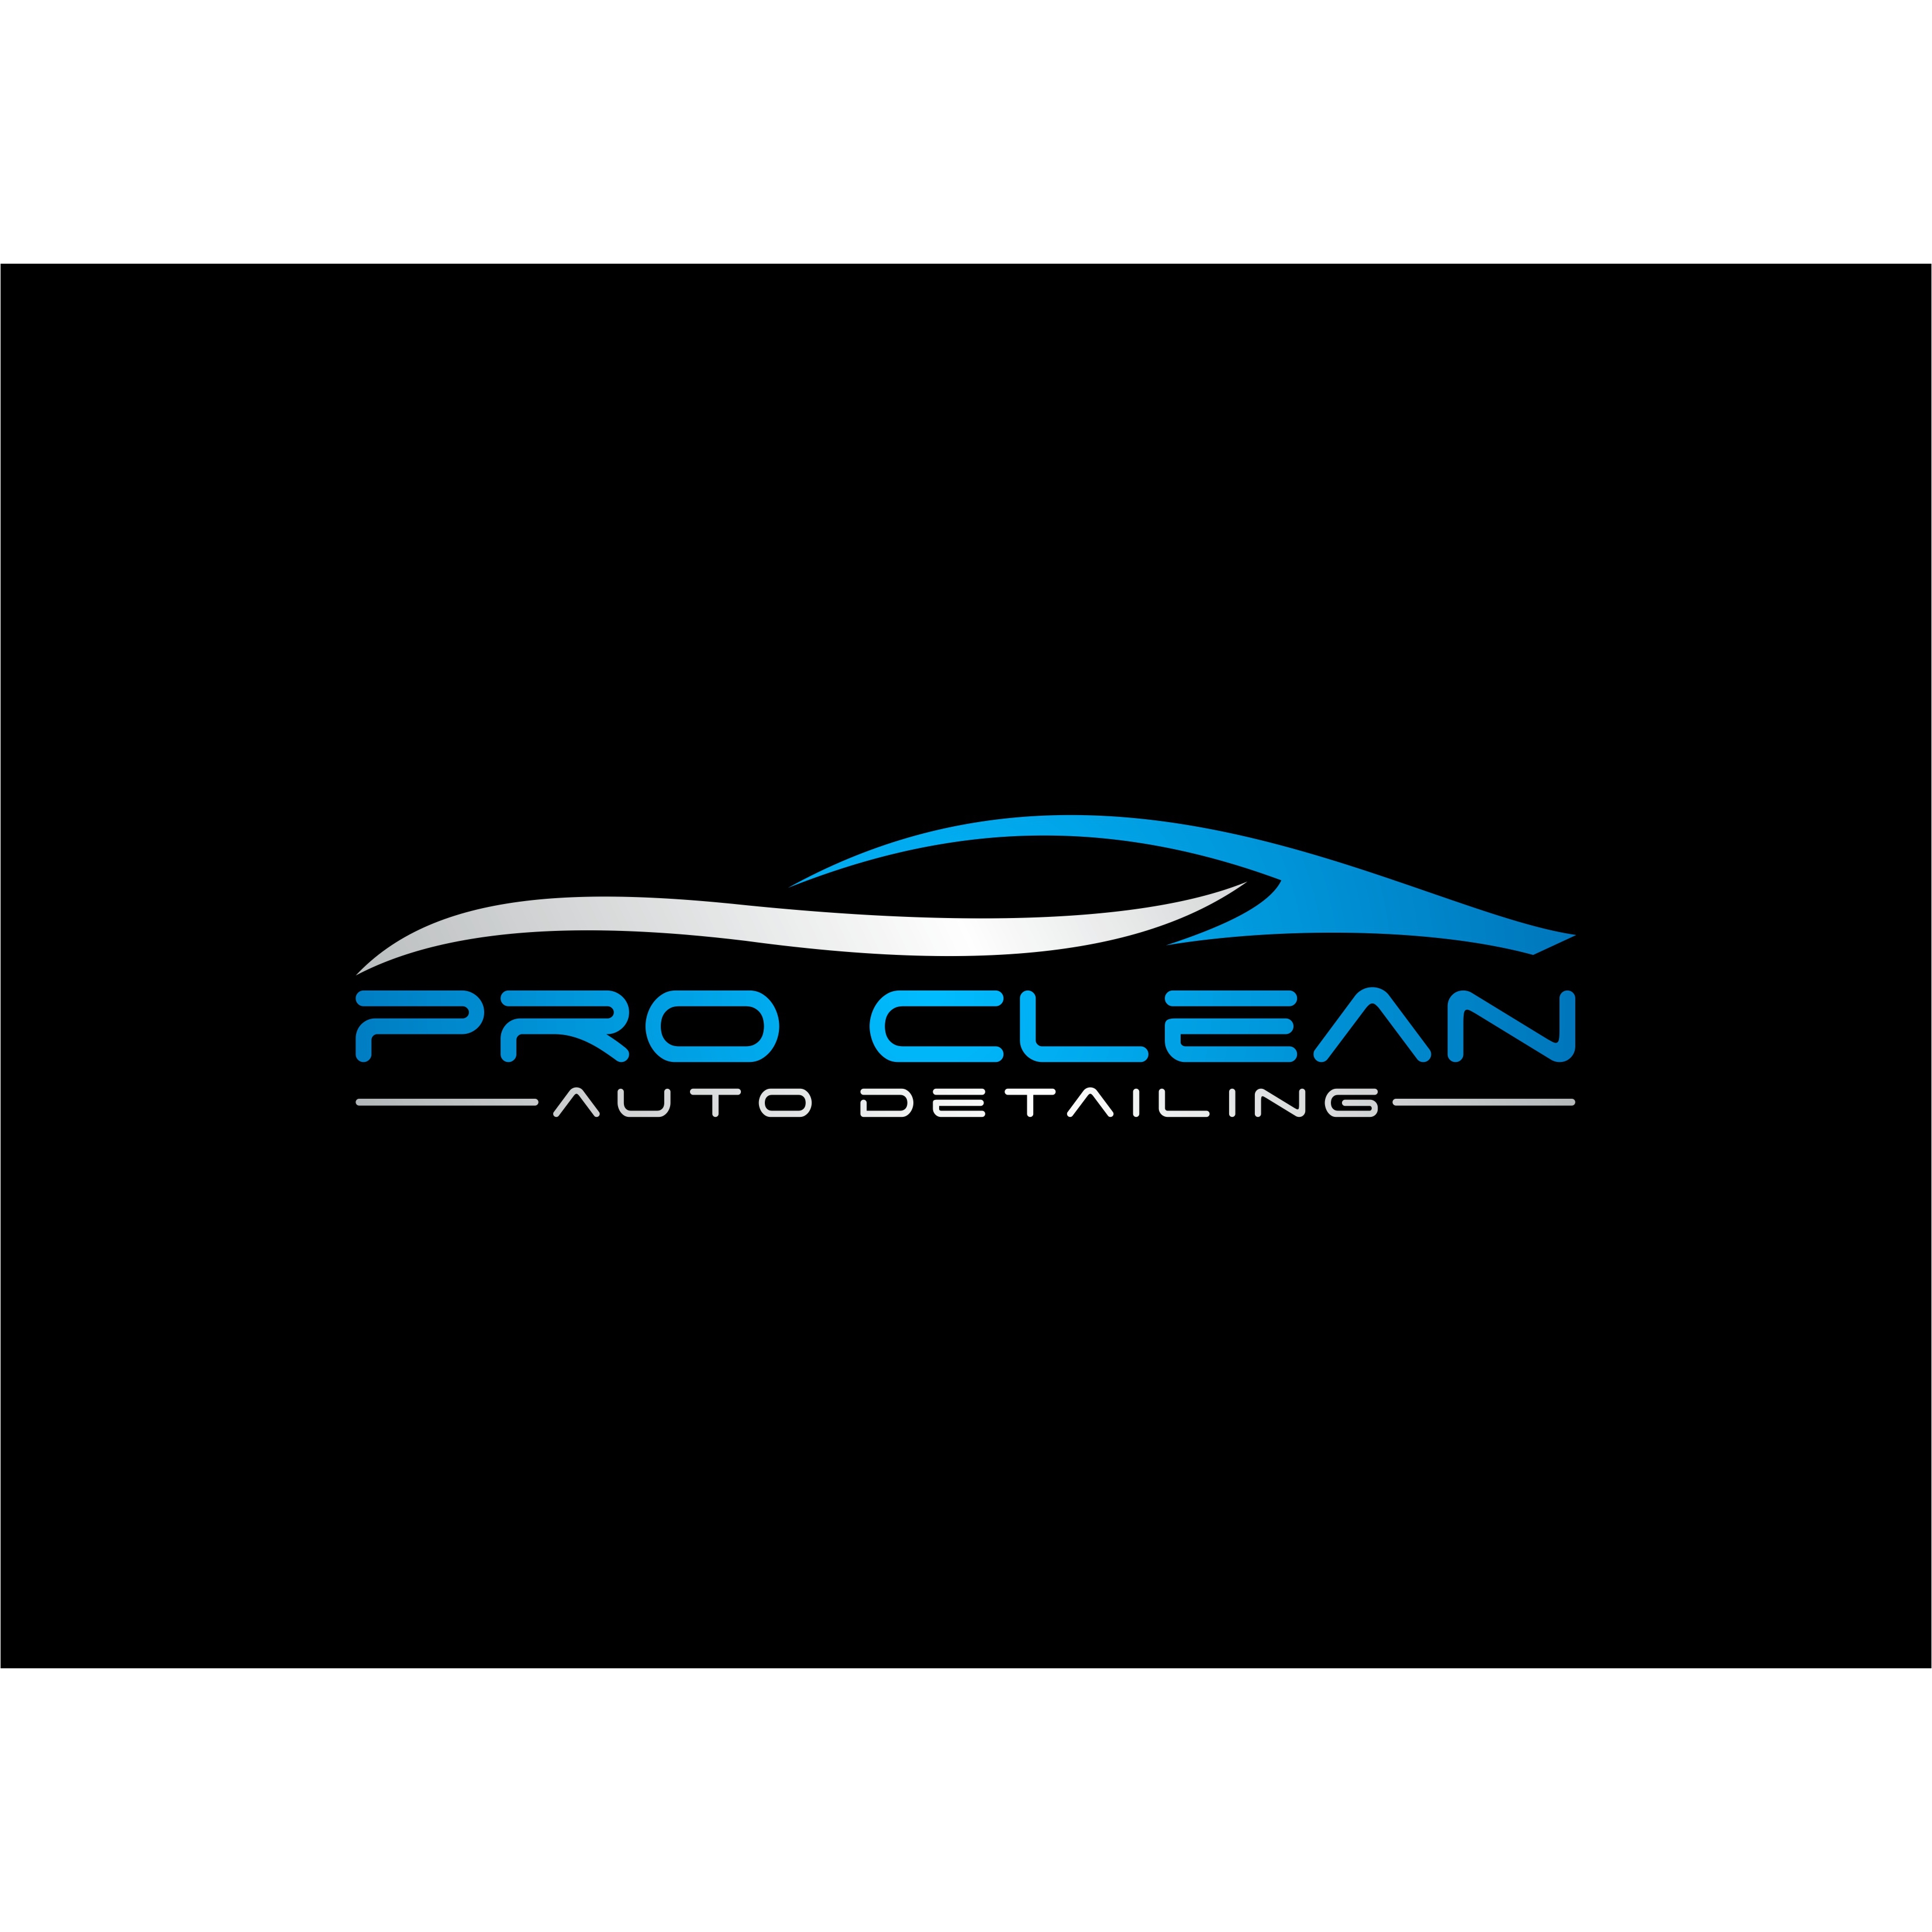 Pro Clean Auto Detailing - Kunda Park, QLD 4556 - (07) 5391 4772 | ShowMeLocal.com